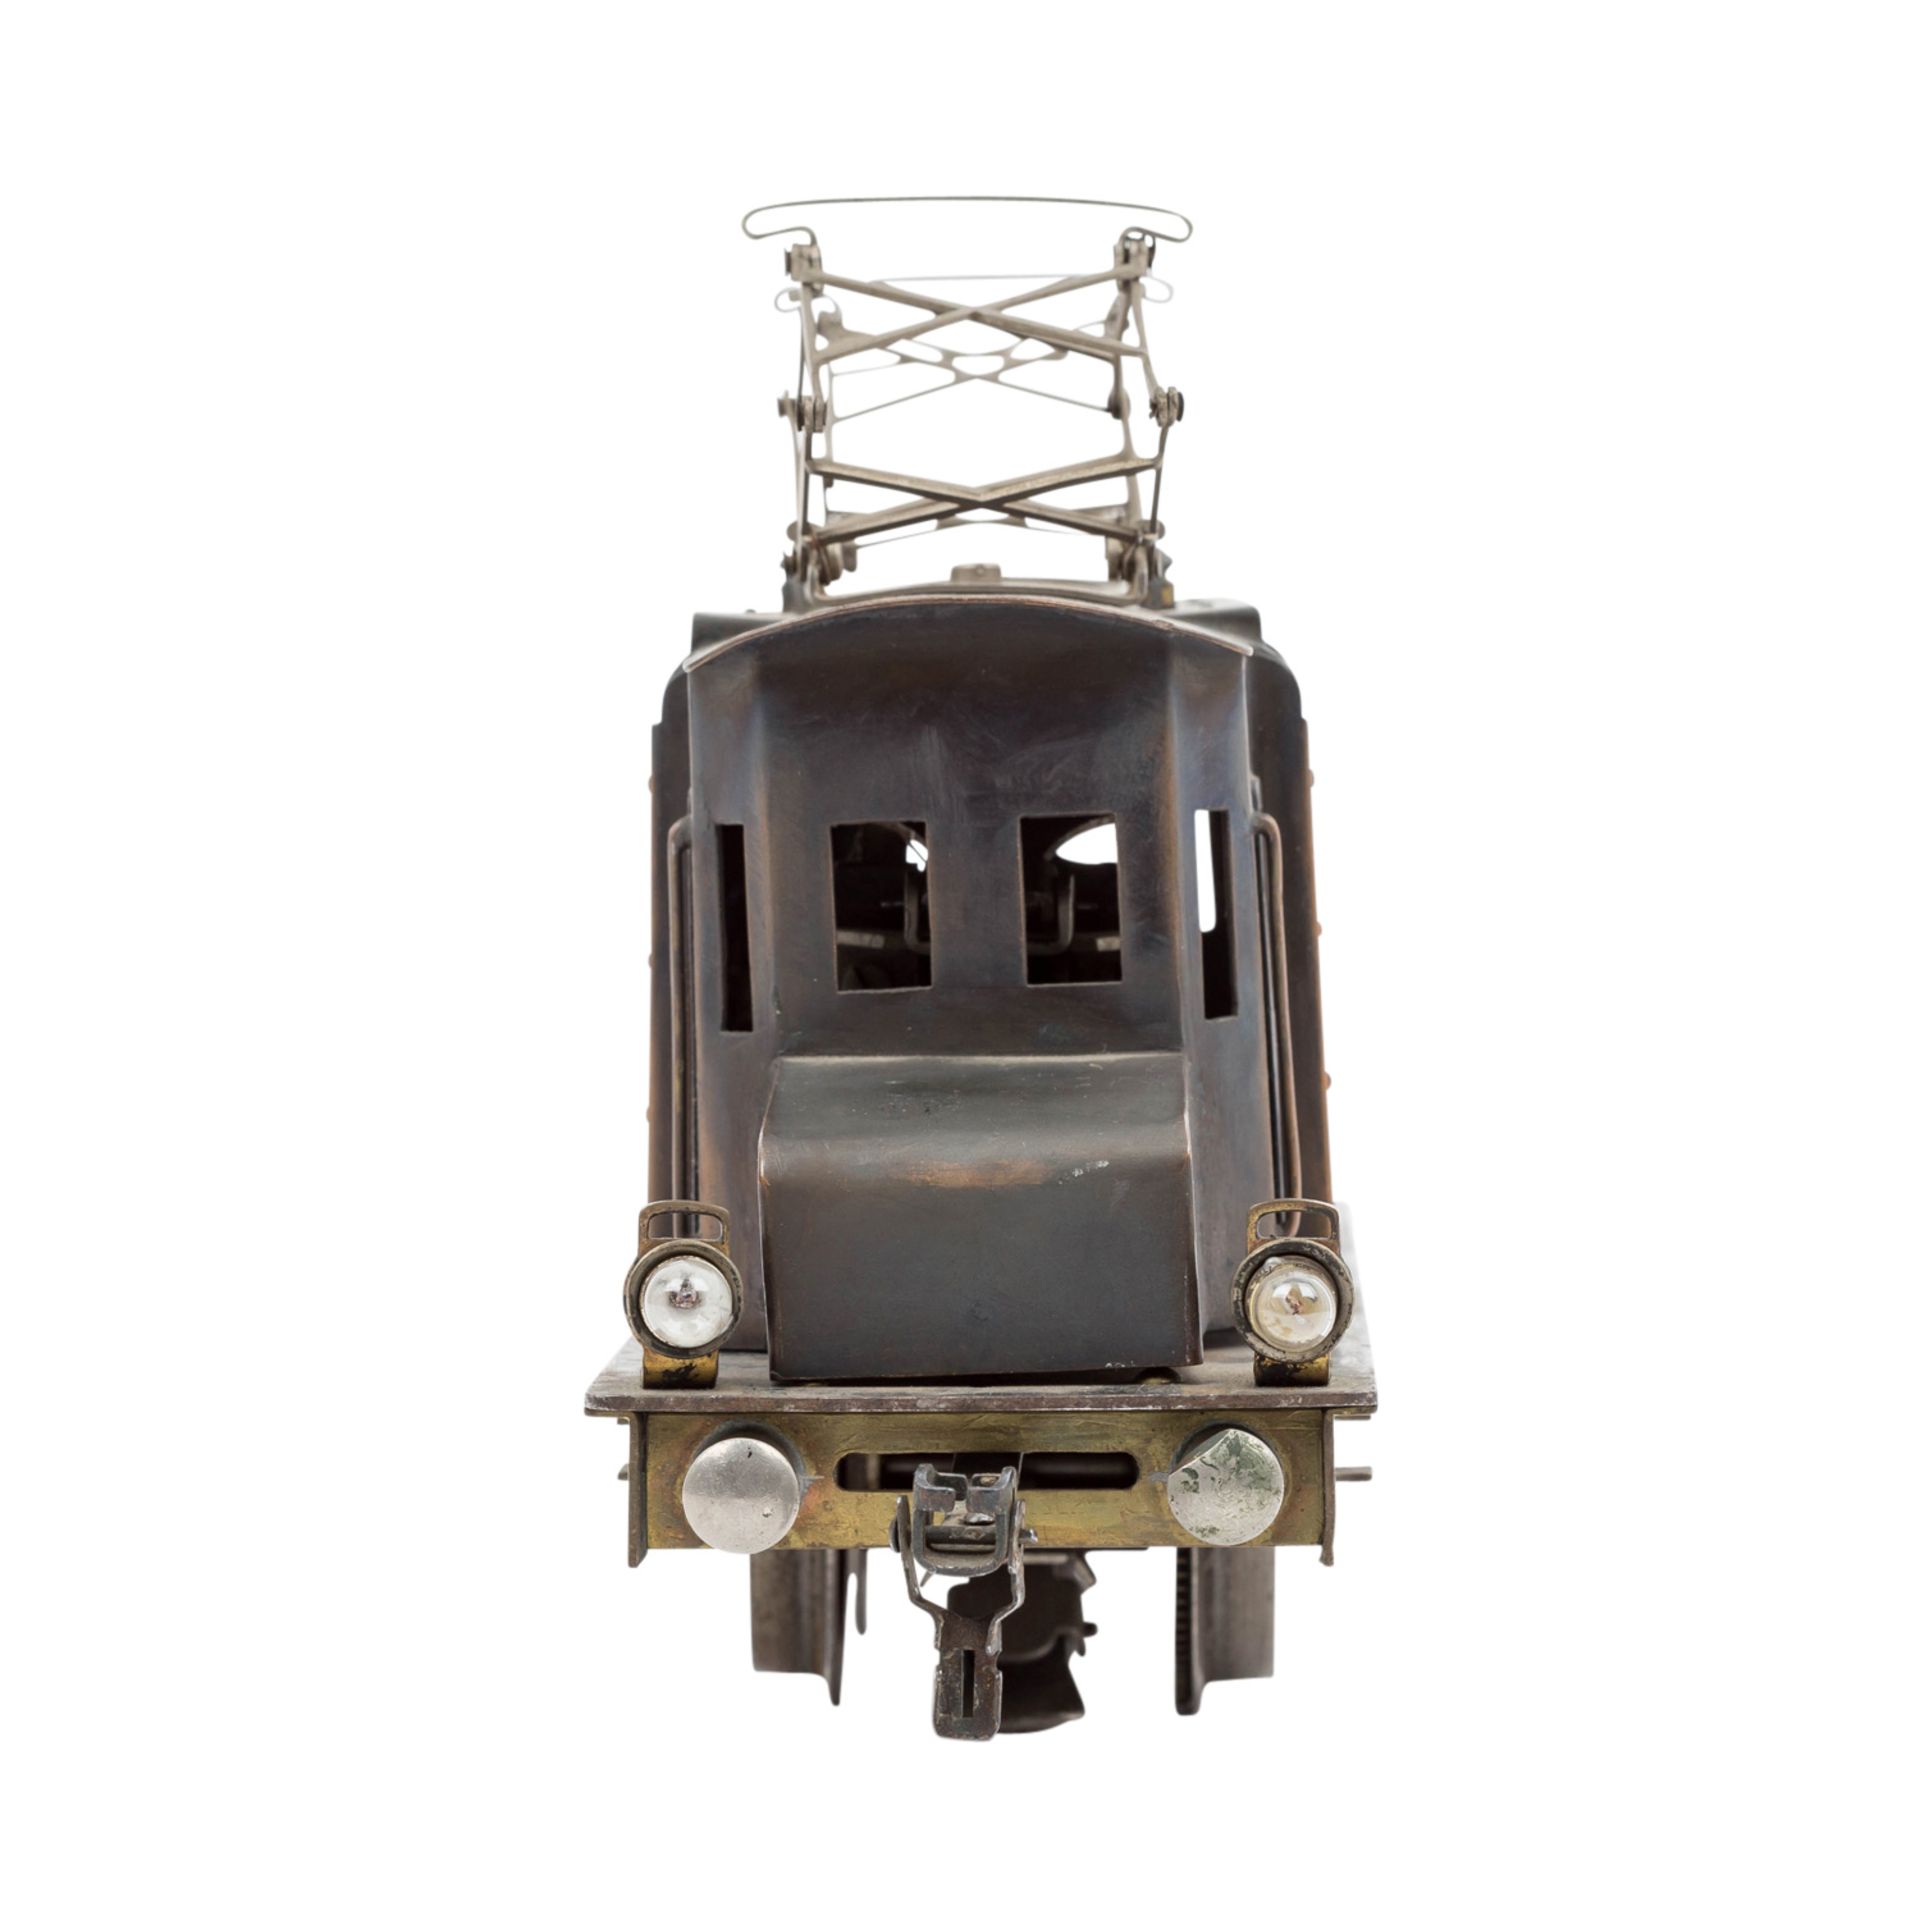 wohl MÄRKLIN E-Lok aus Kupfer, Spur 0, 1930er/40er Jahre, - Bild 2 aus 6